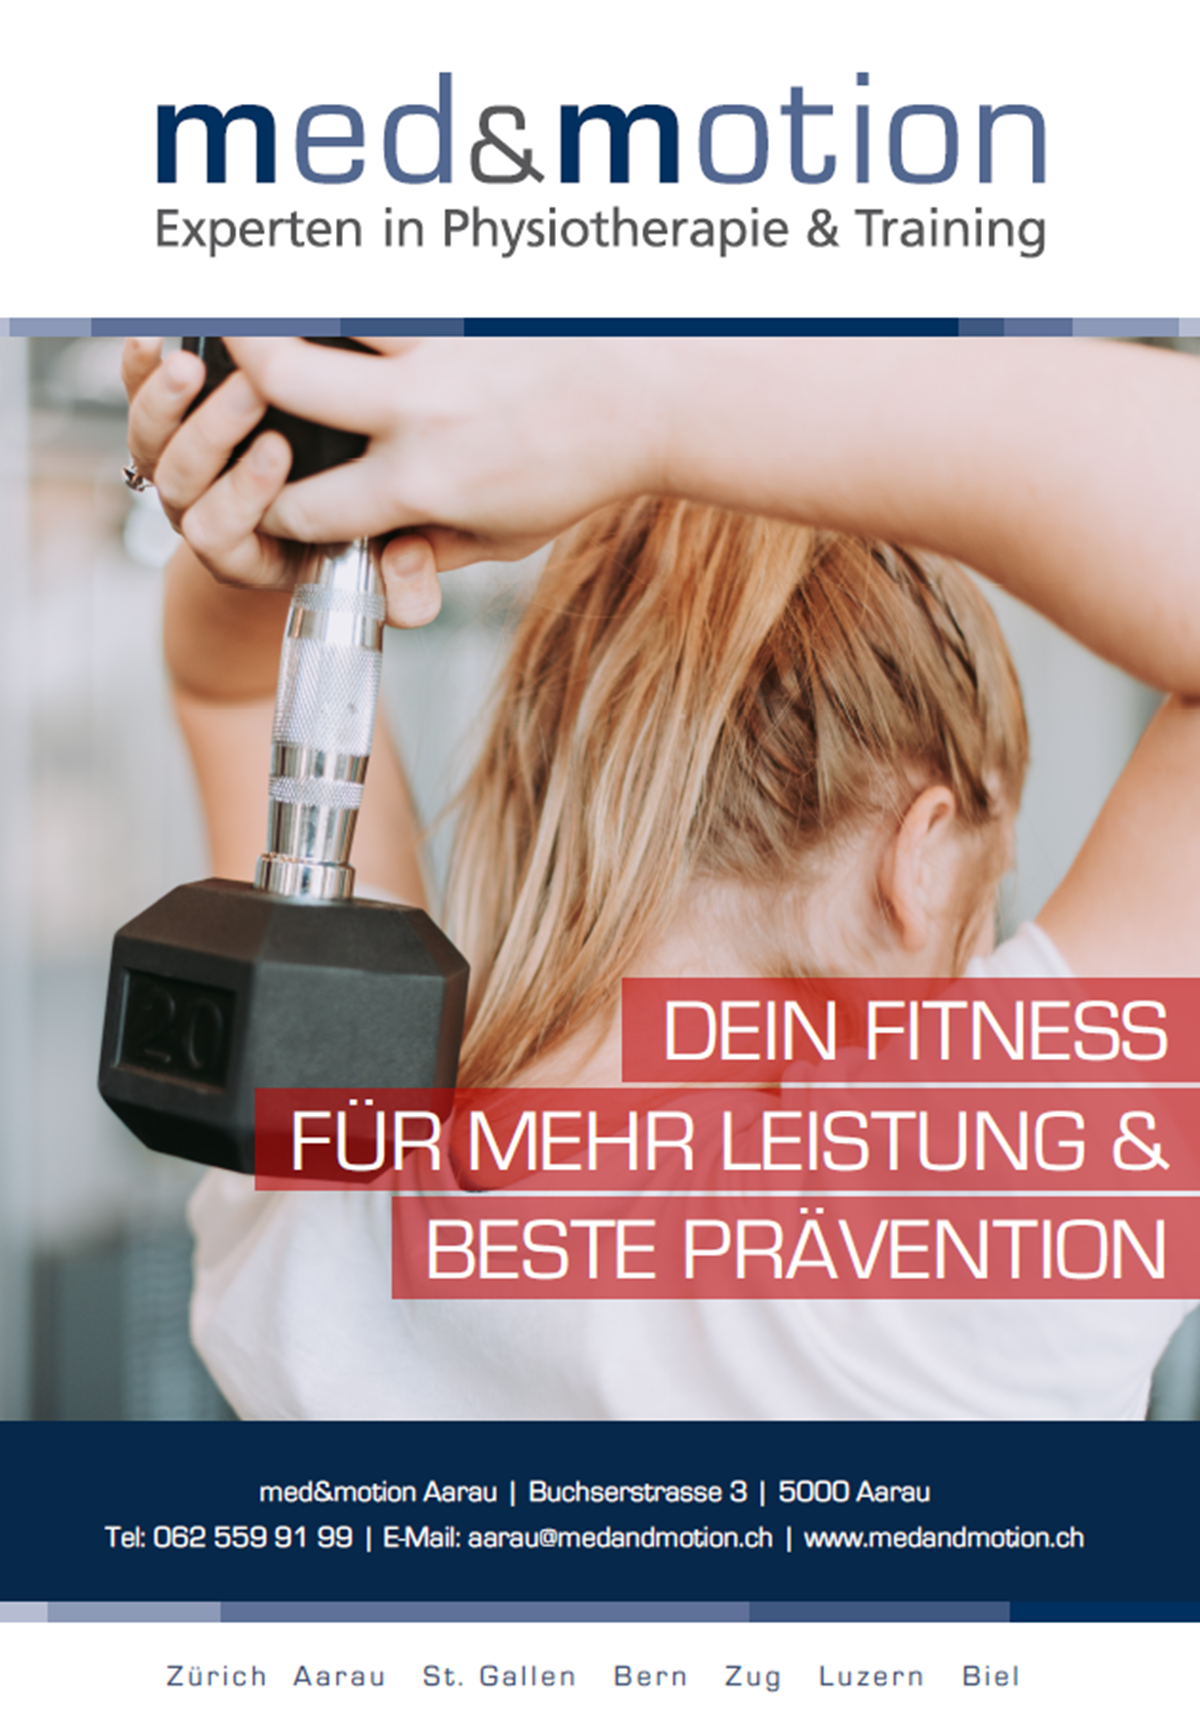 med&motion Aarau AG